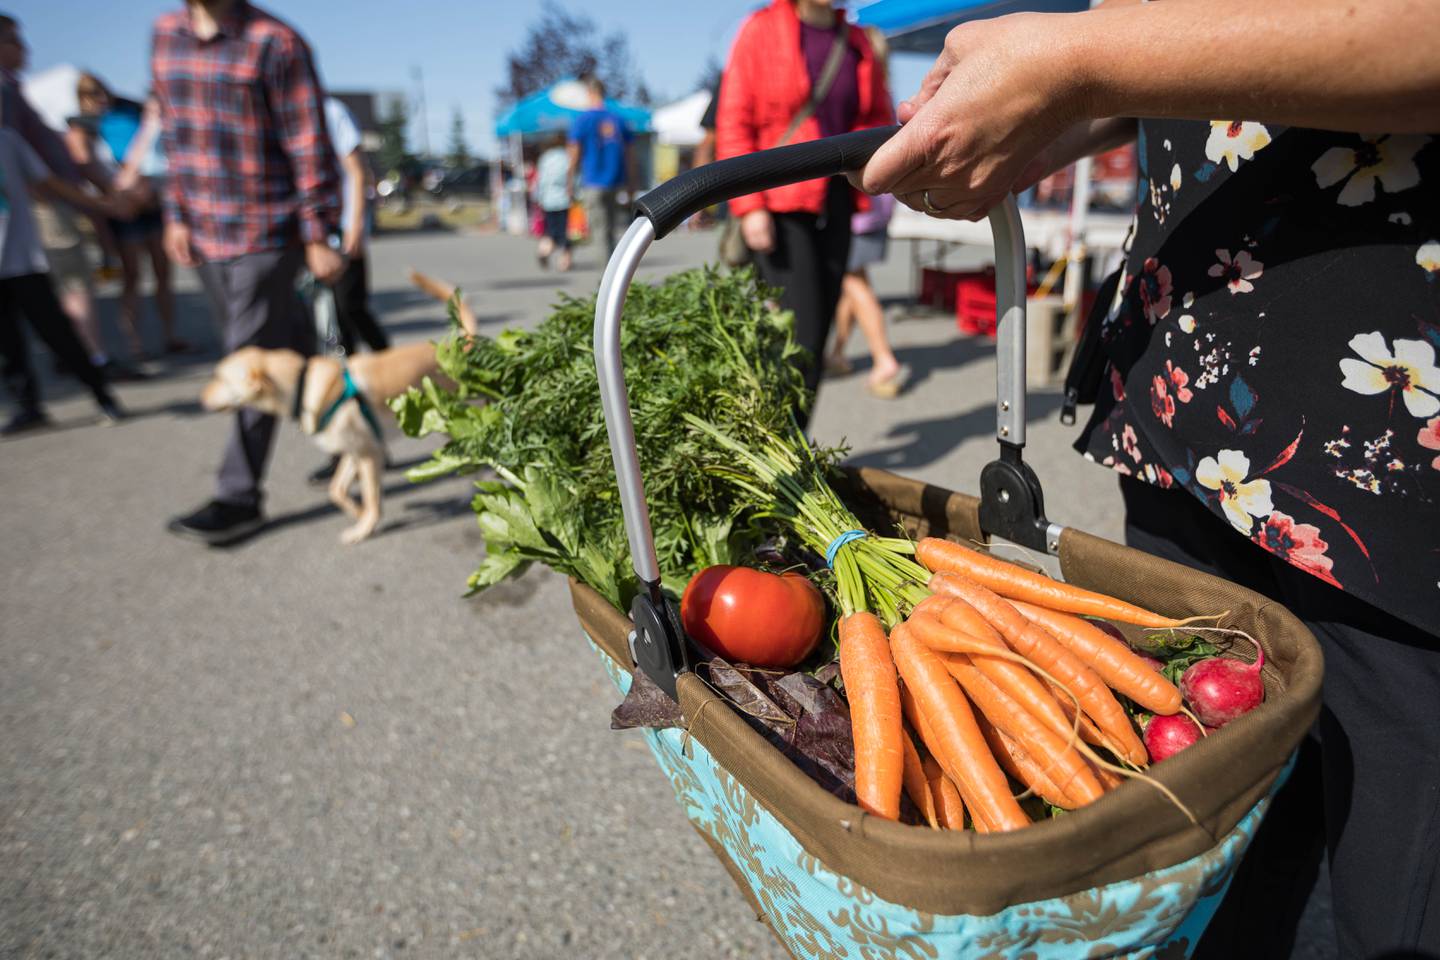 Alaska Grown, South Anchorage Farmers Market, Stefanie Stewart, carrot, carrots, farmer's market, farmers market, produce, radish, radishes, tomato, tomatoes